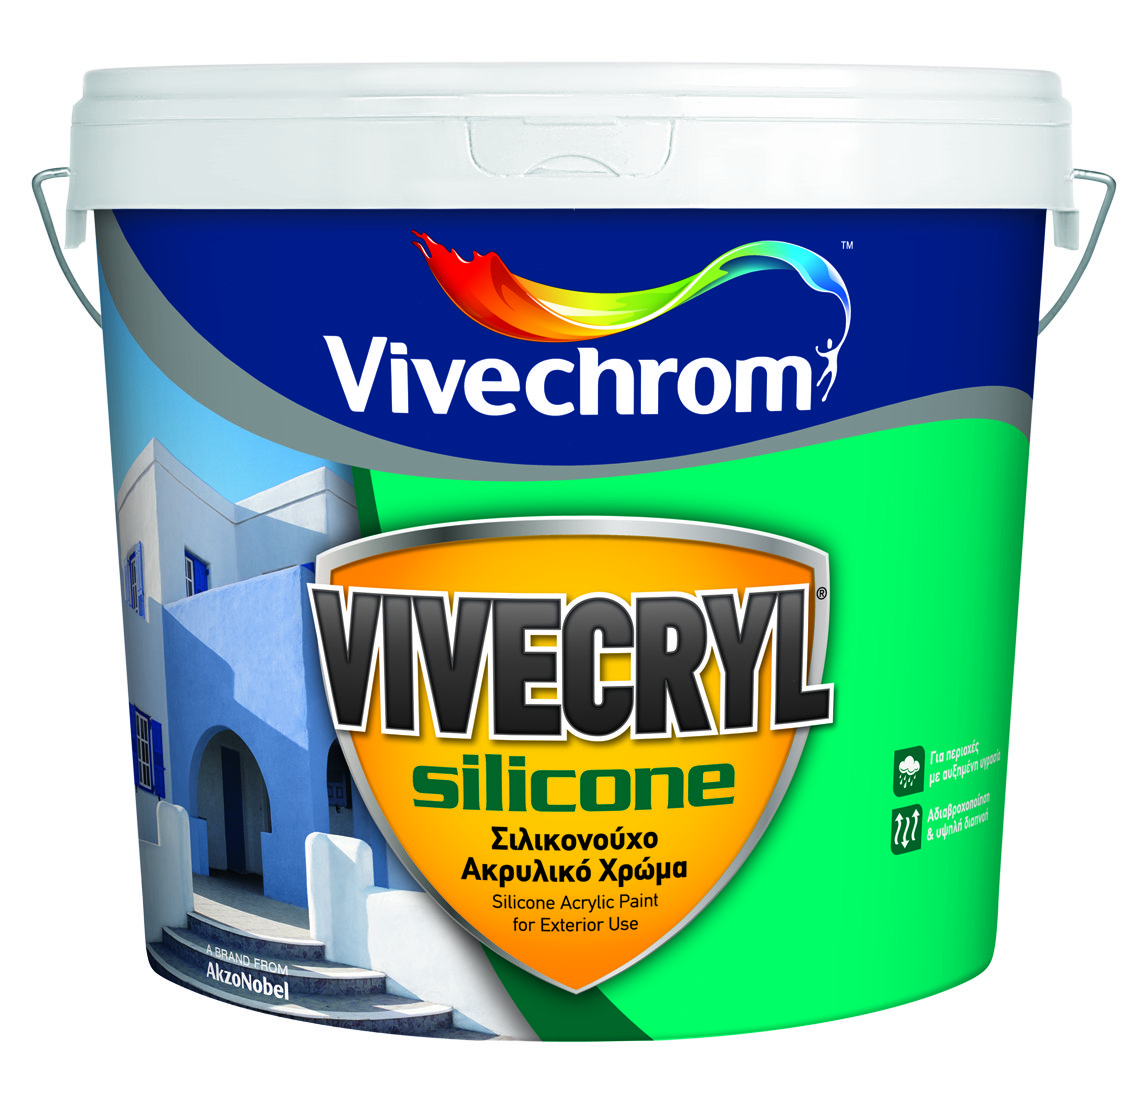 Vivechrom Vivecryl Silicone Matt Finish Mixing Base D 10L